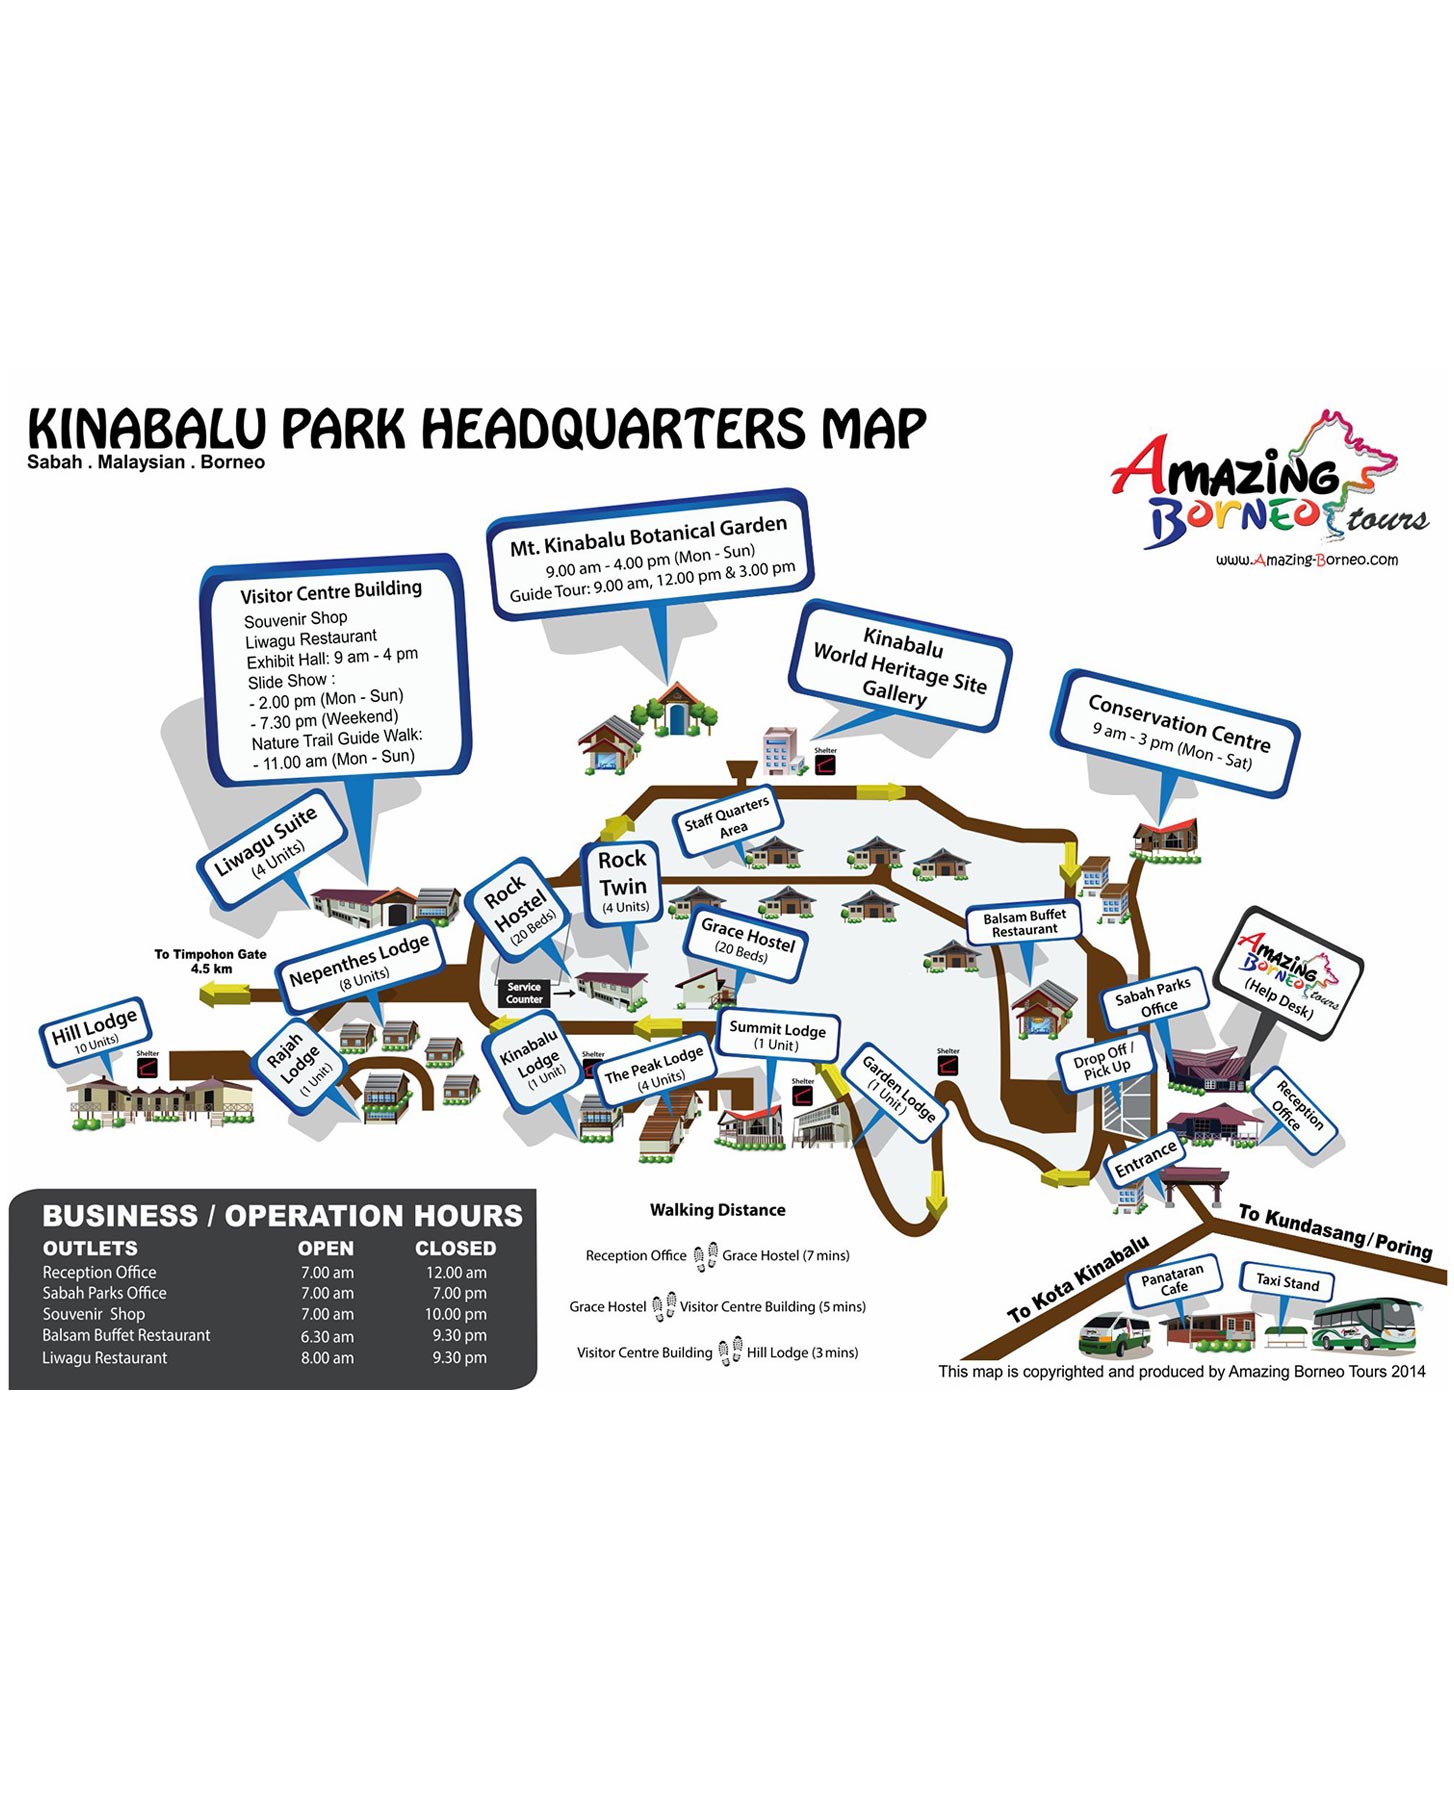 Kinabalu Park Headquarters Map